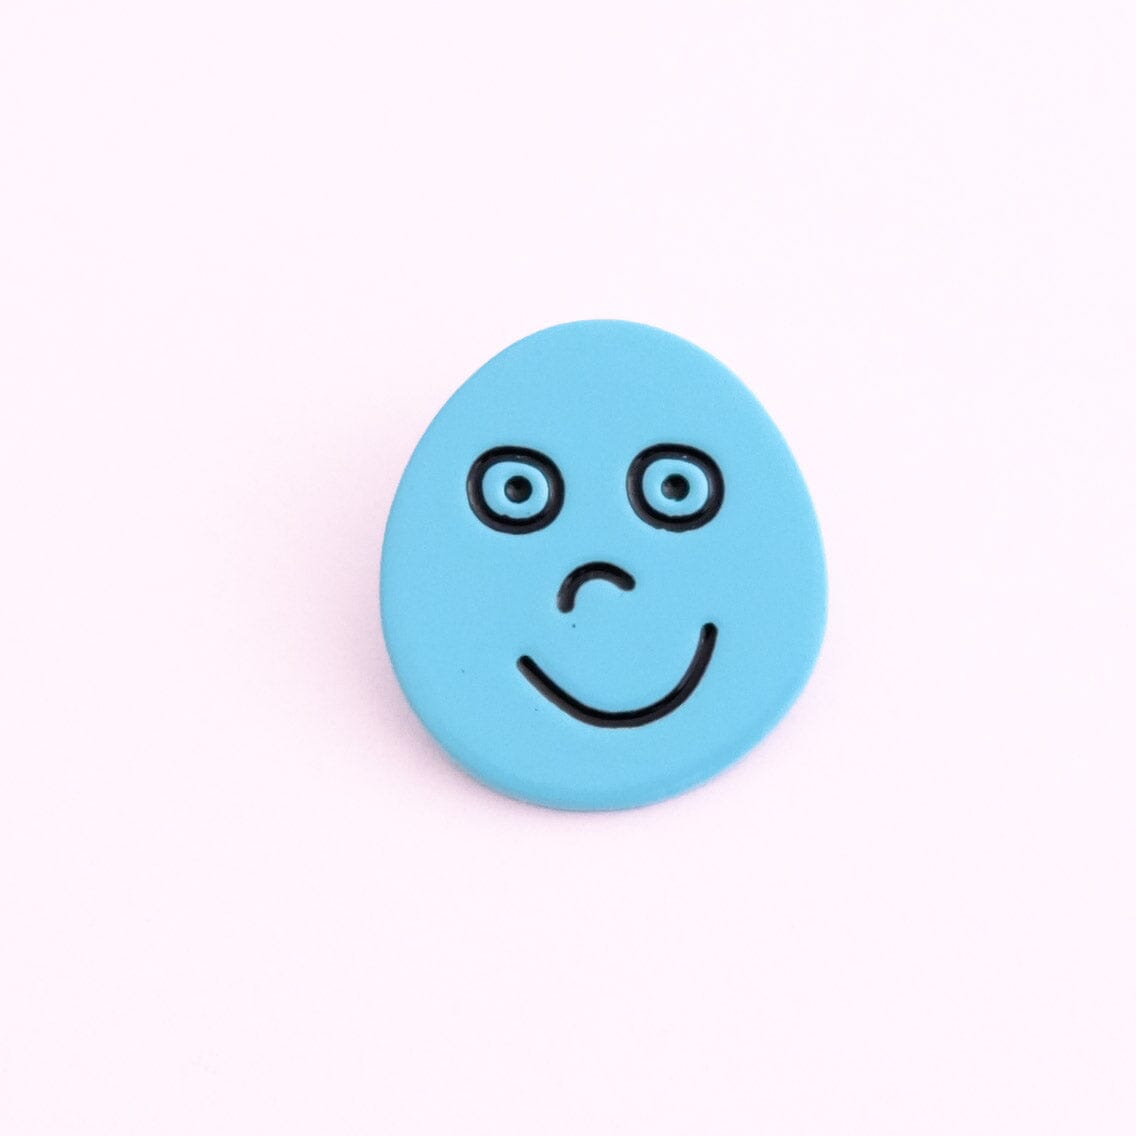 Pin "Happy Faces" Global Affairs Blau 